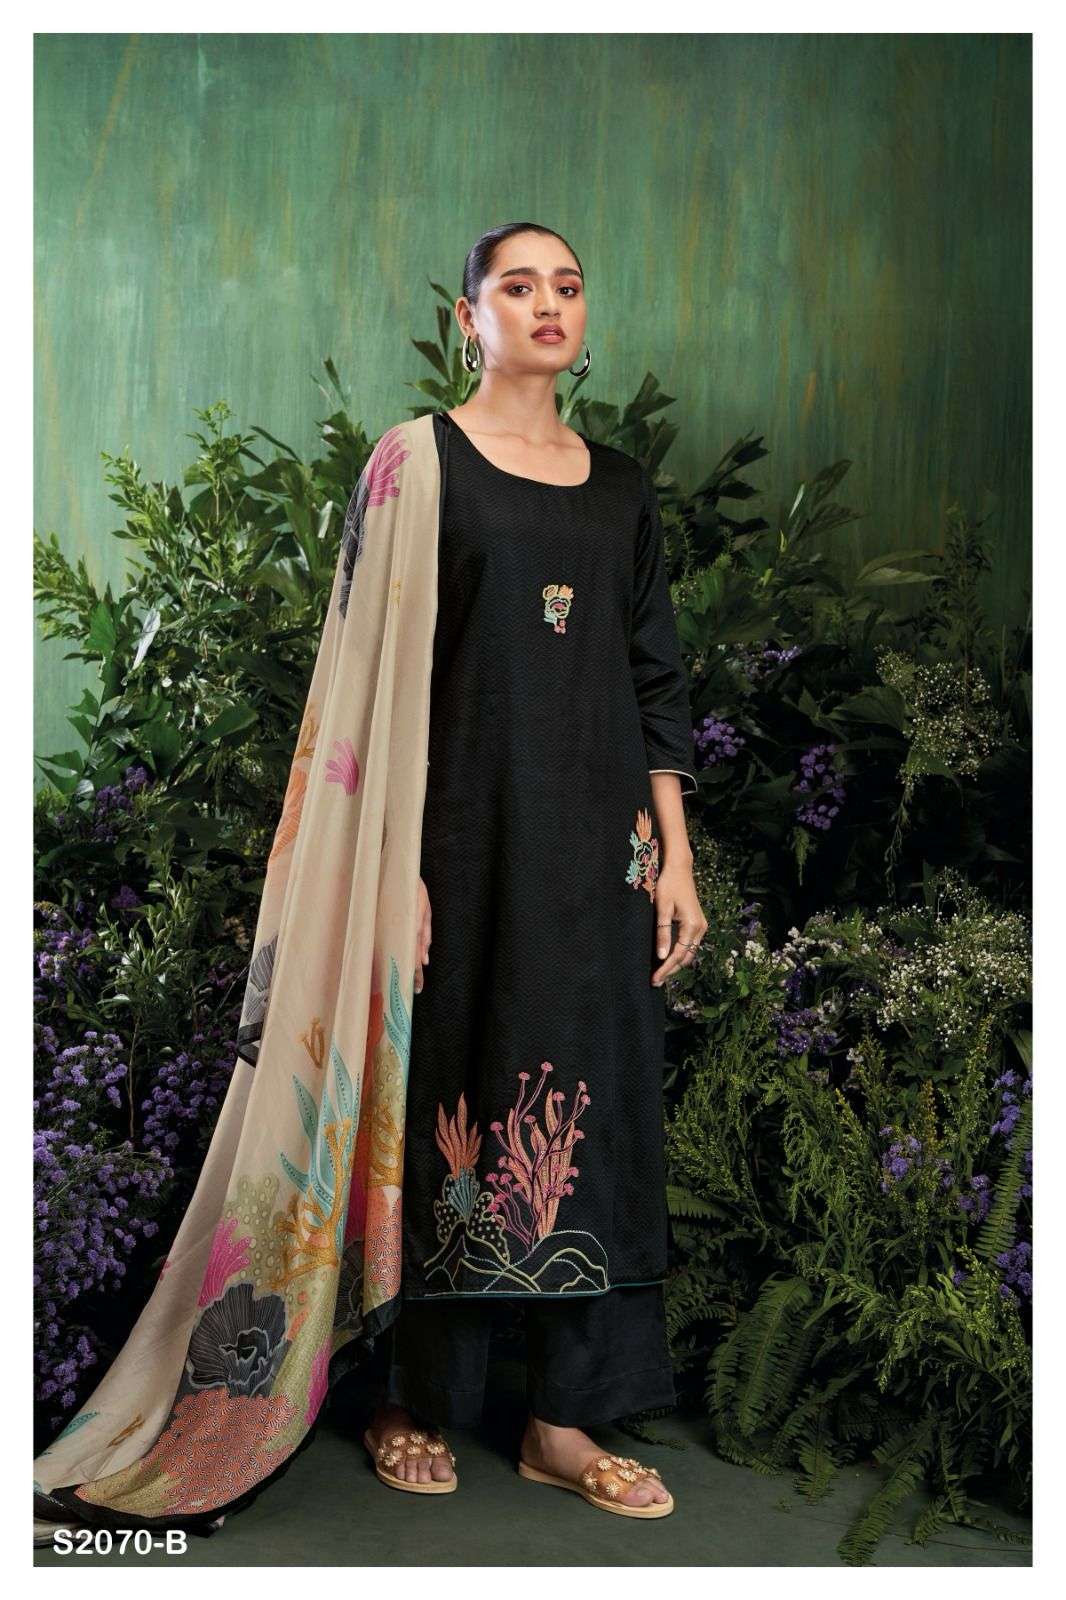 ganga coralie 2070 colour series designer wedding wear salwar kameez wholesaler surat gujarat